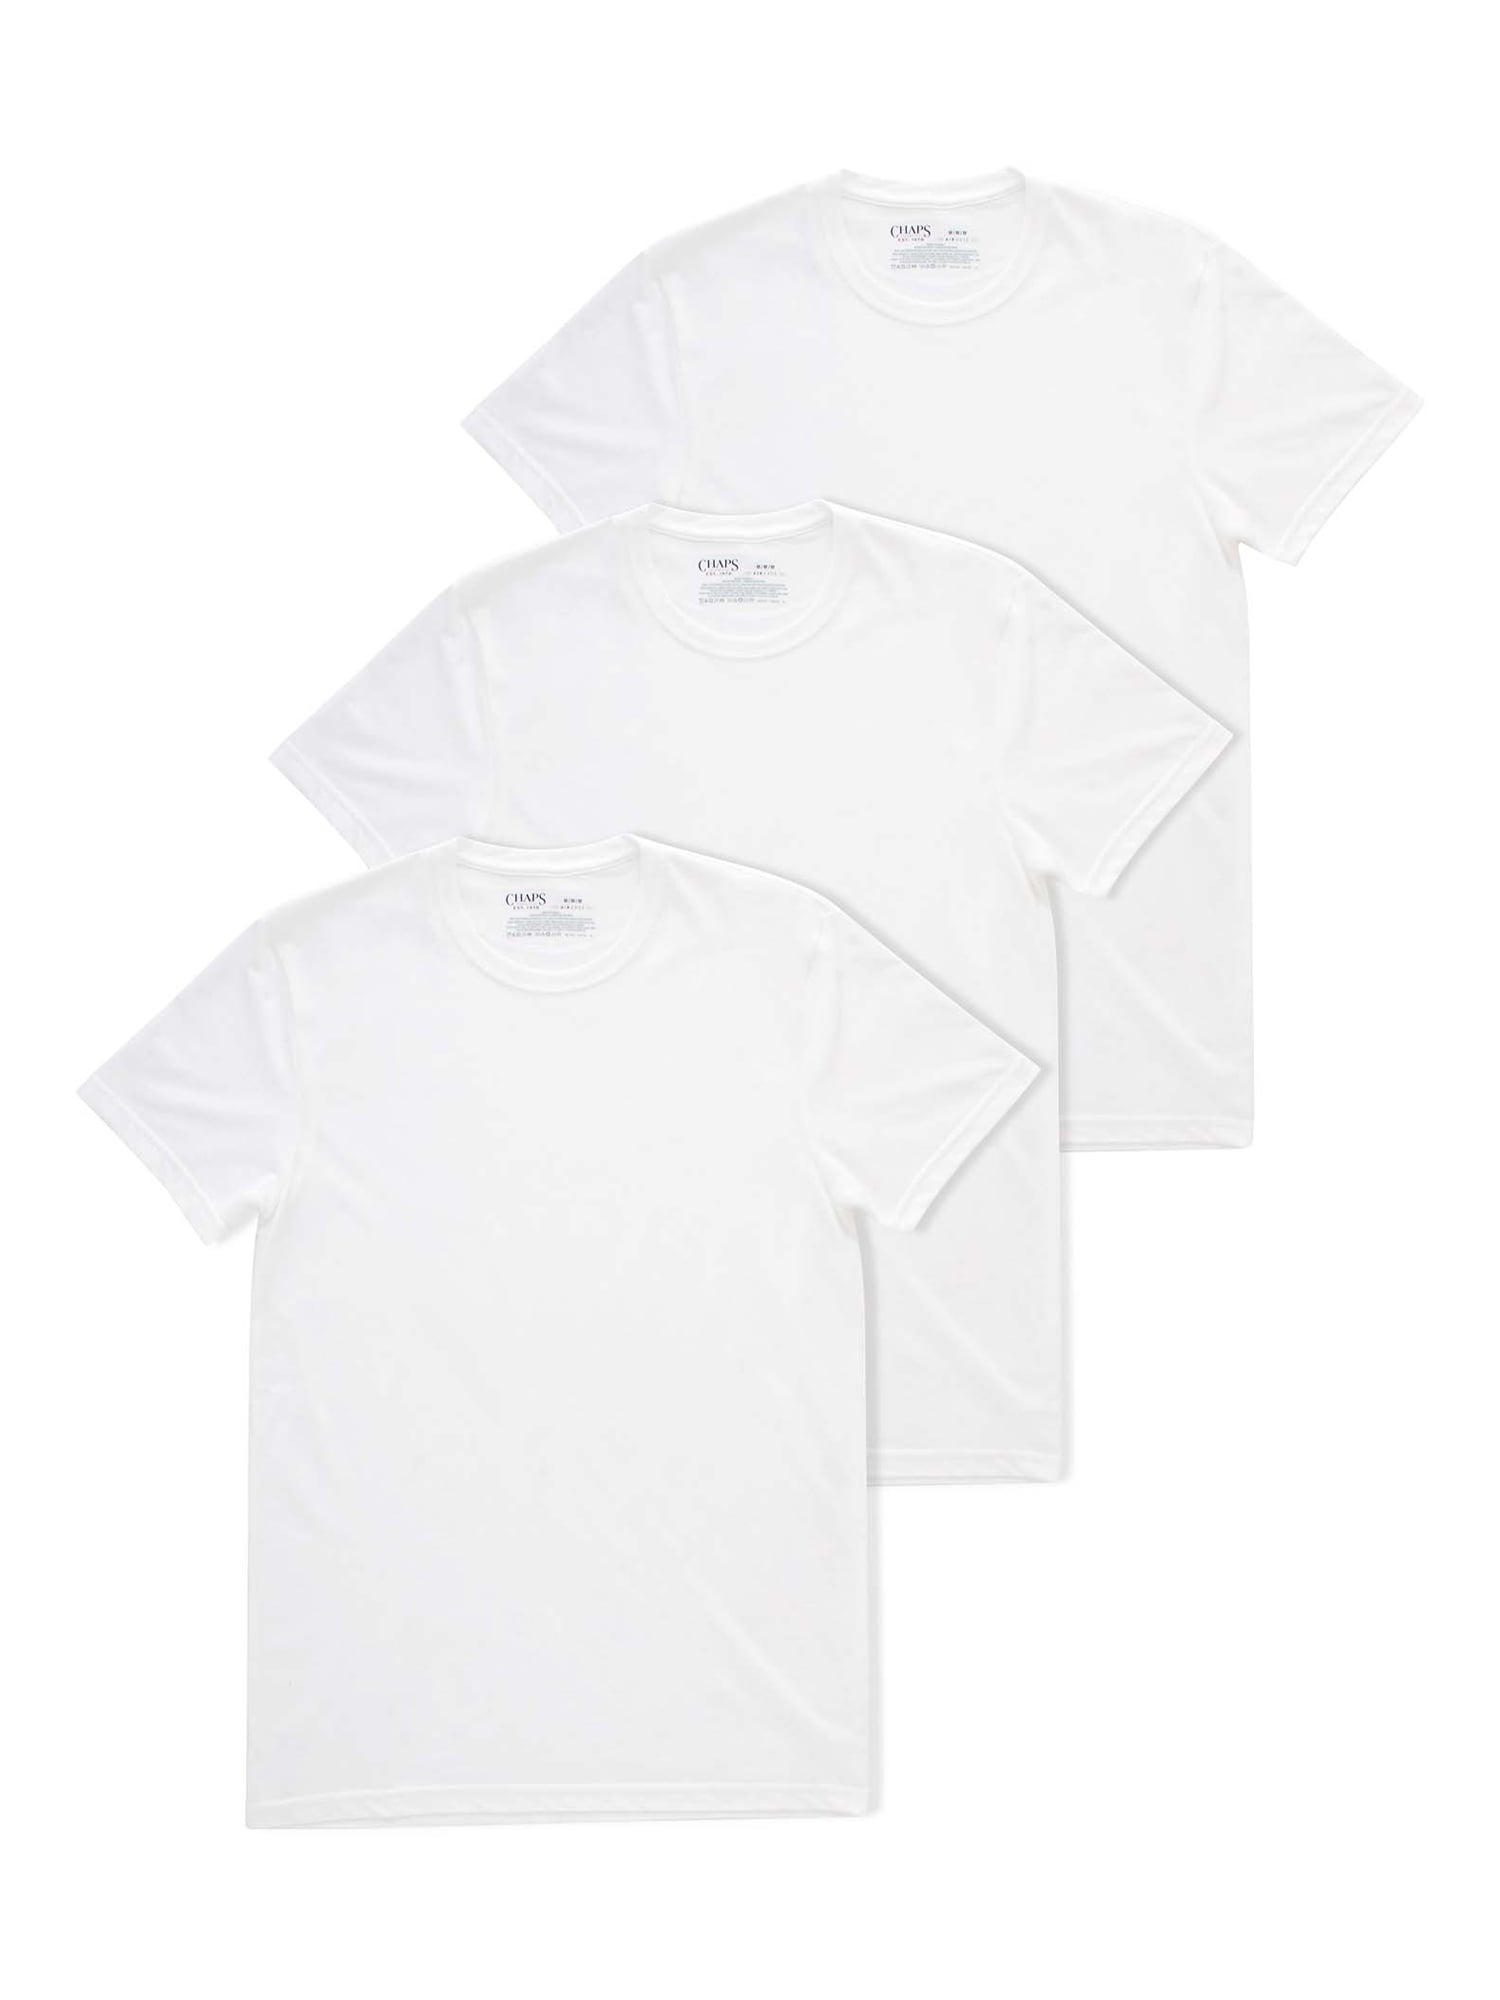 Chaps Men's Crew T-Shirt, 3 Pack 